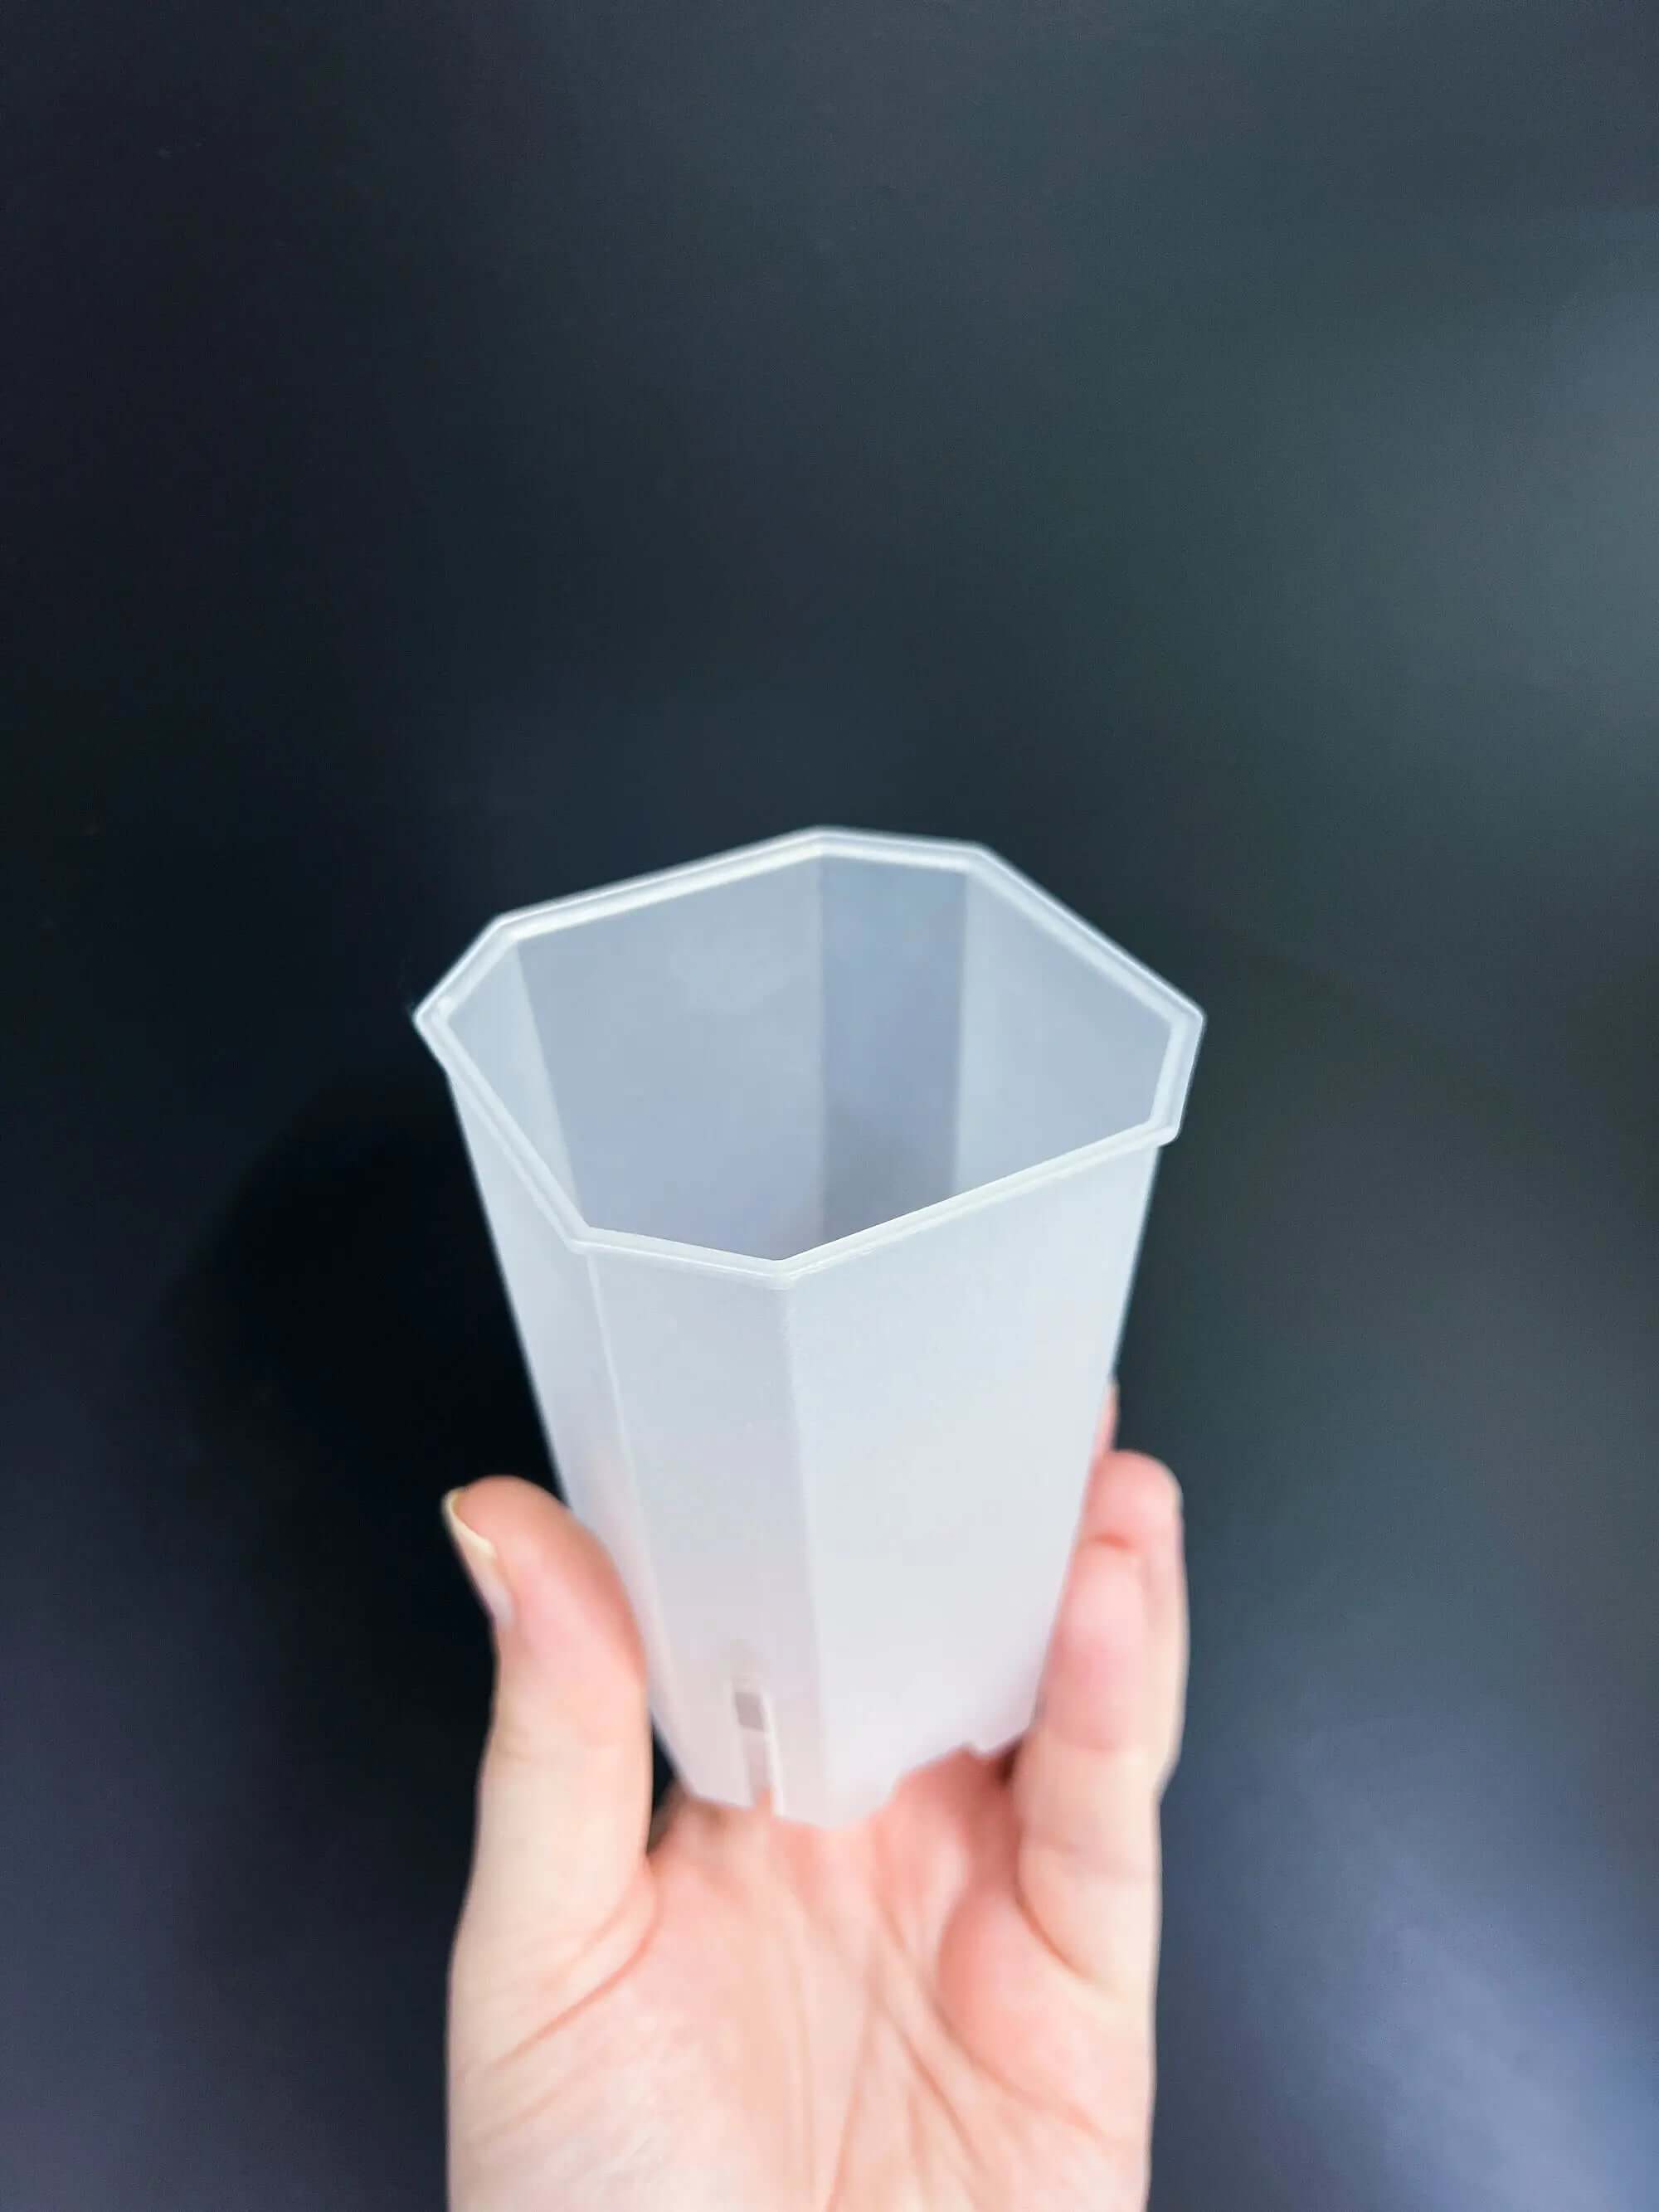 Square Aroid Pots - Semi-opaque Plastic - SMUKHI